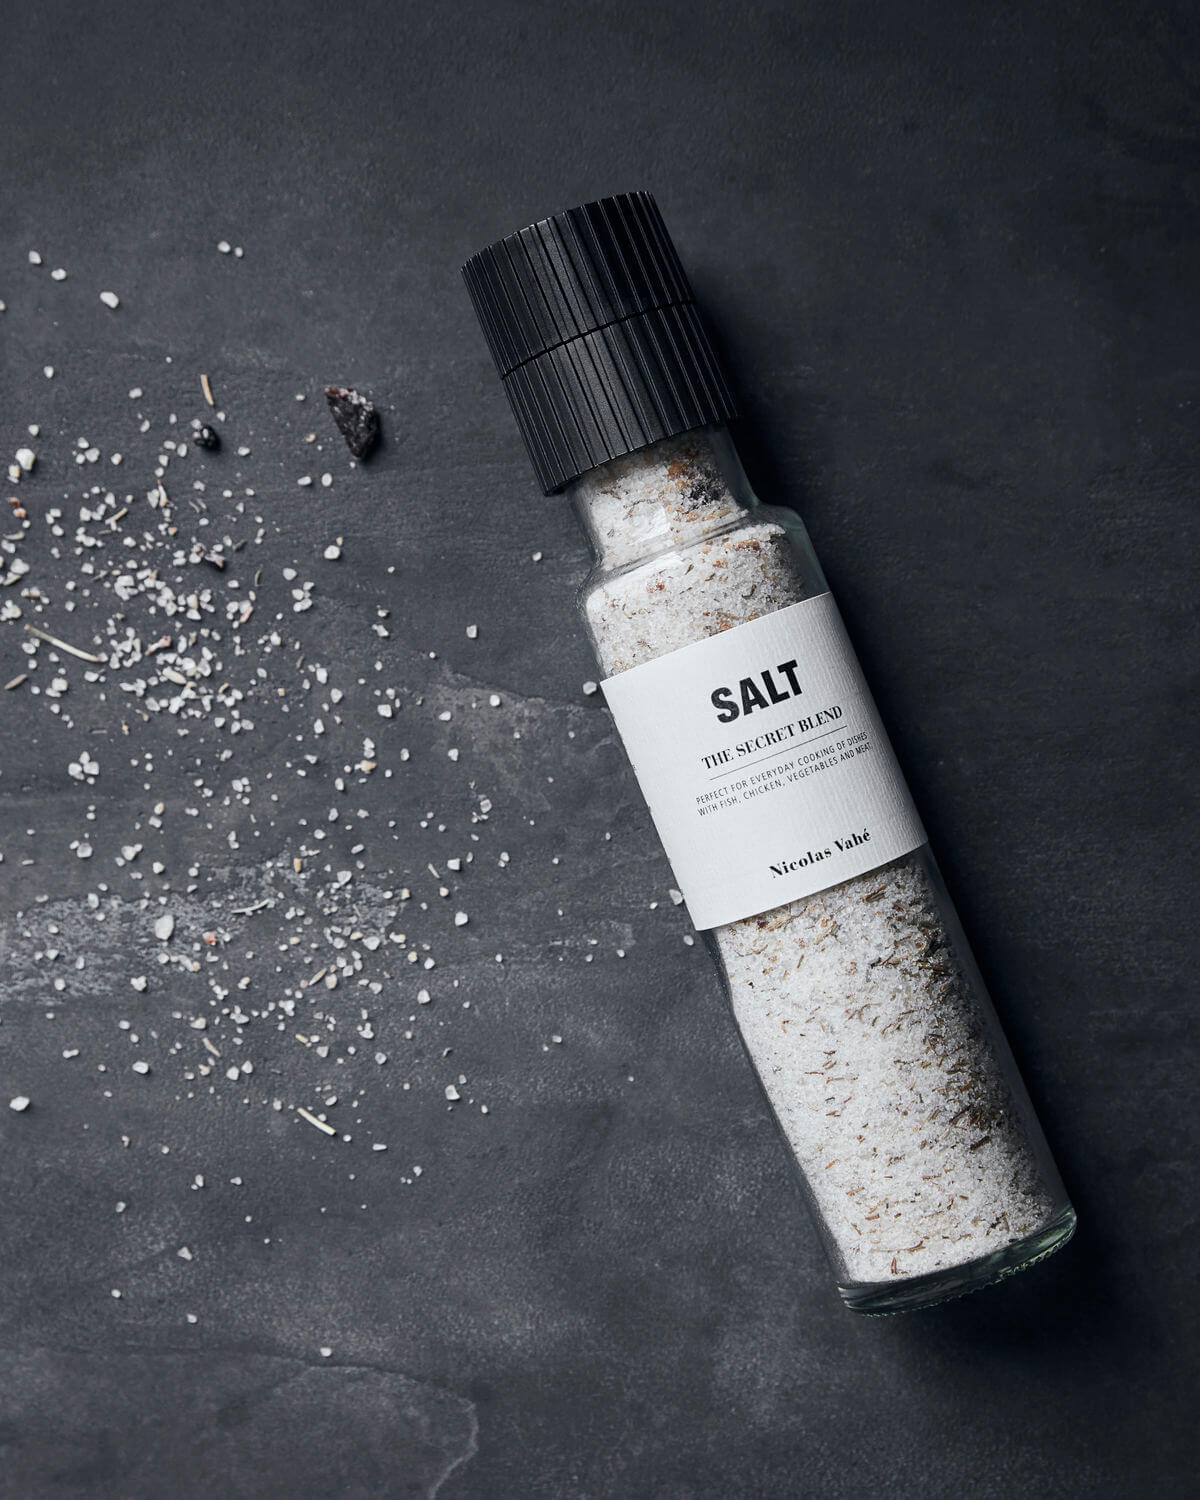 
            Salt - The secret blend 320g